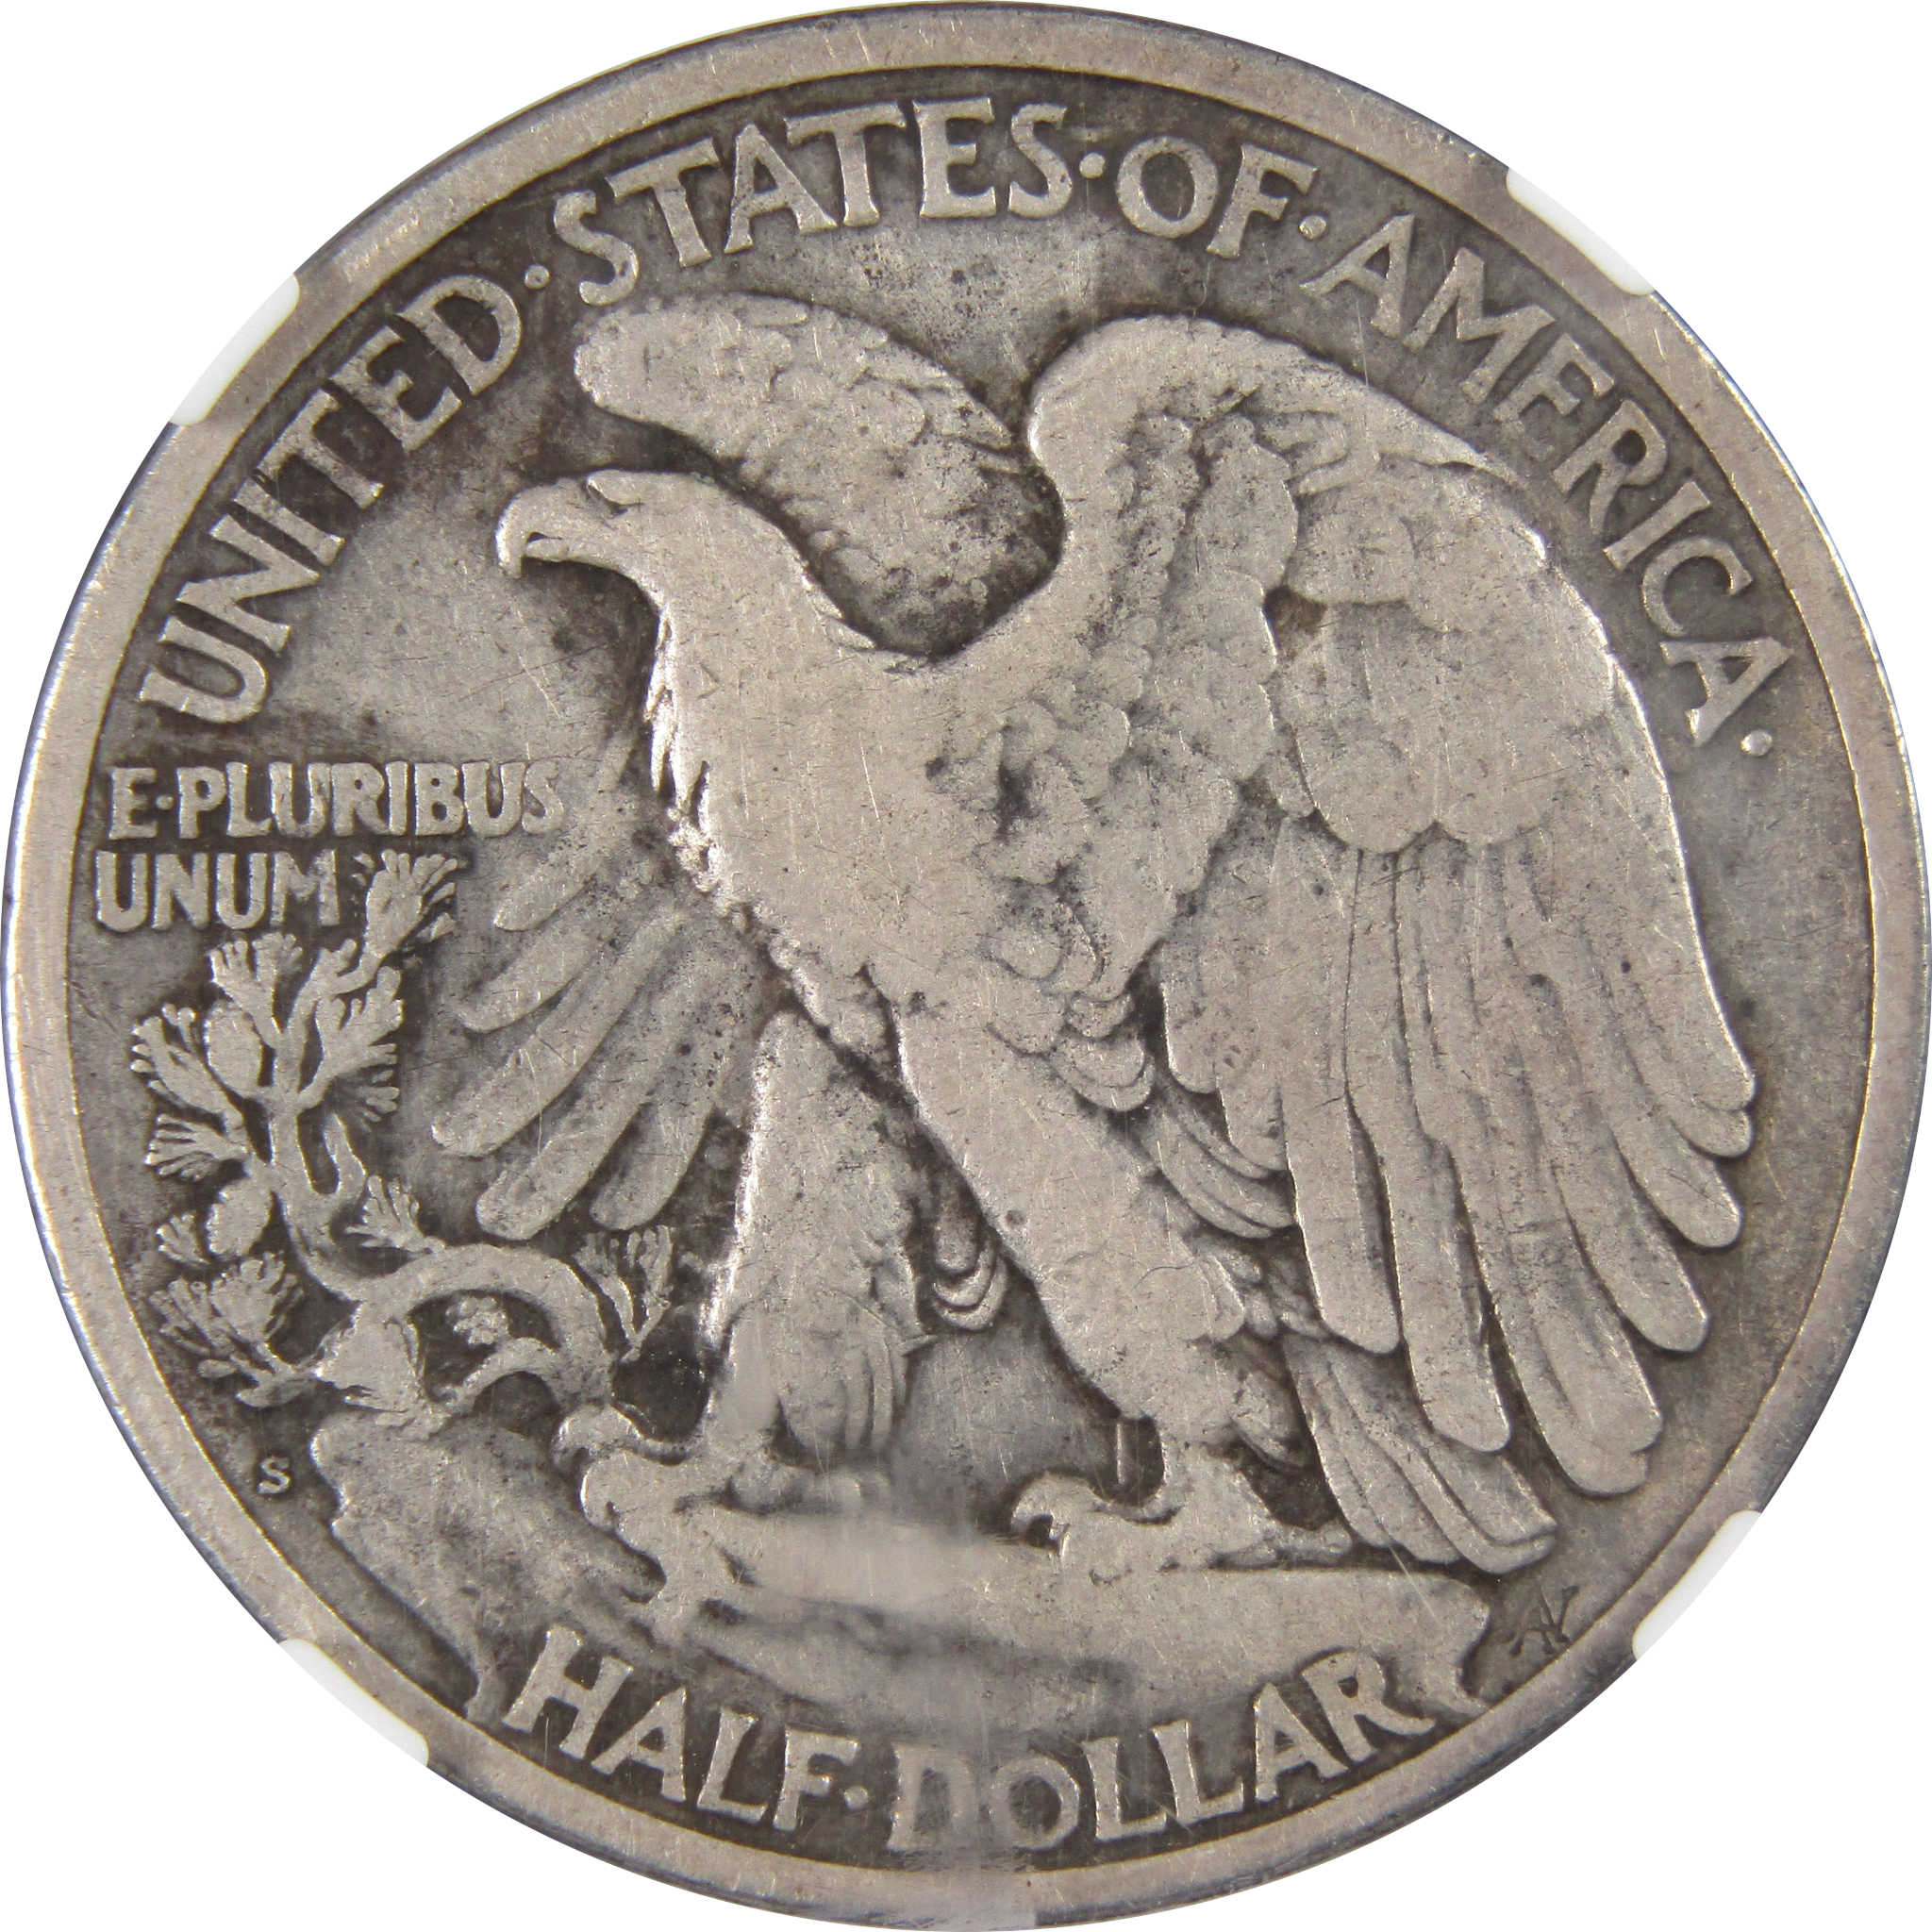 1921 S Liberty Walking Half Dollar VF 20 NGC 90% Silver SKU:I7759